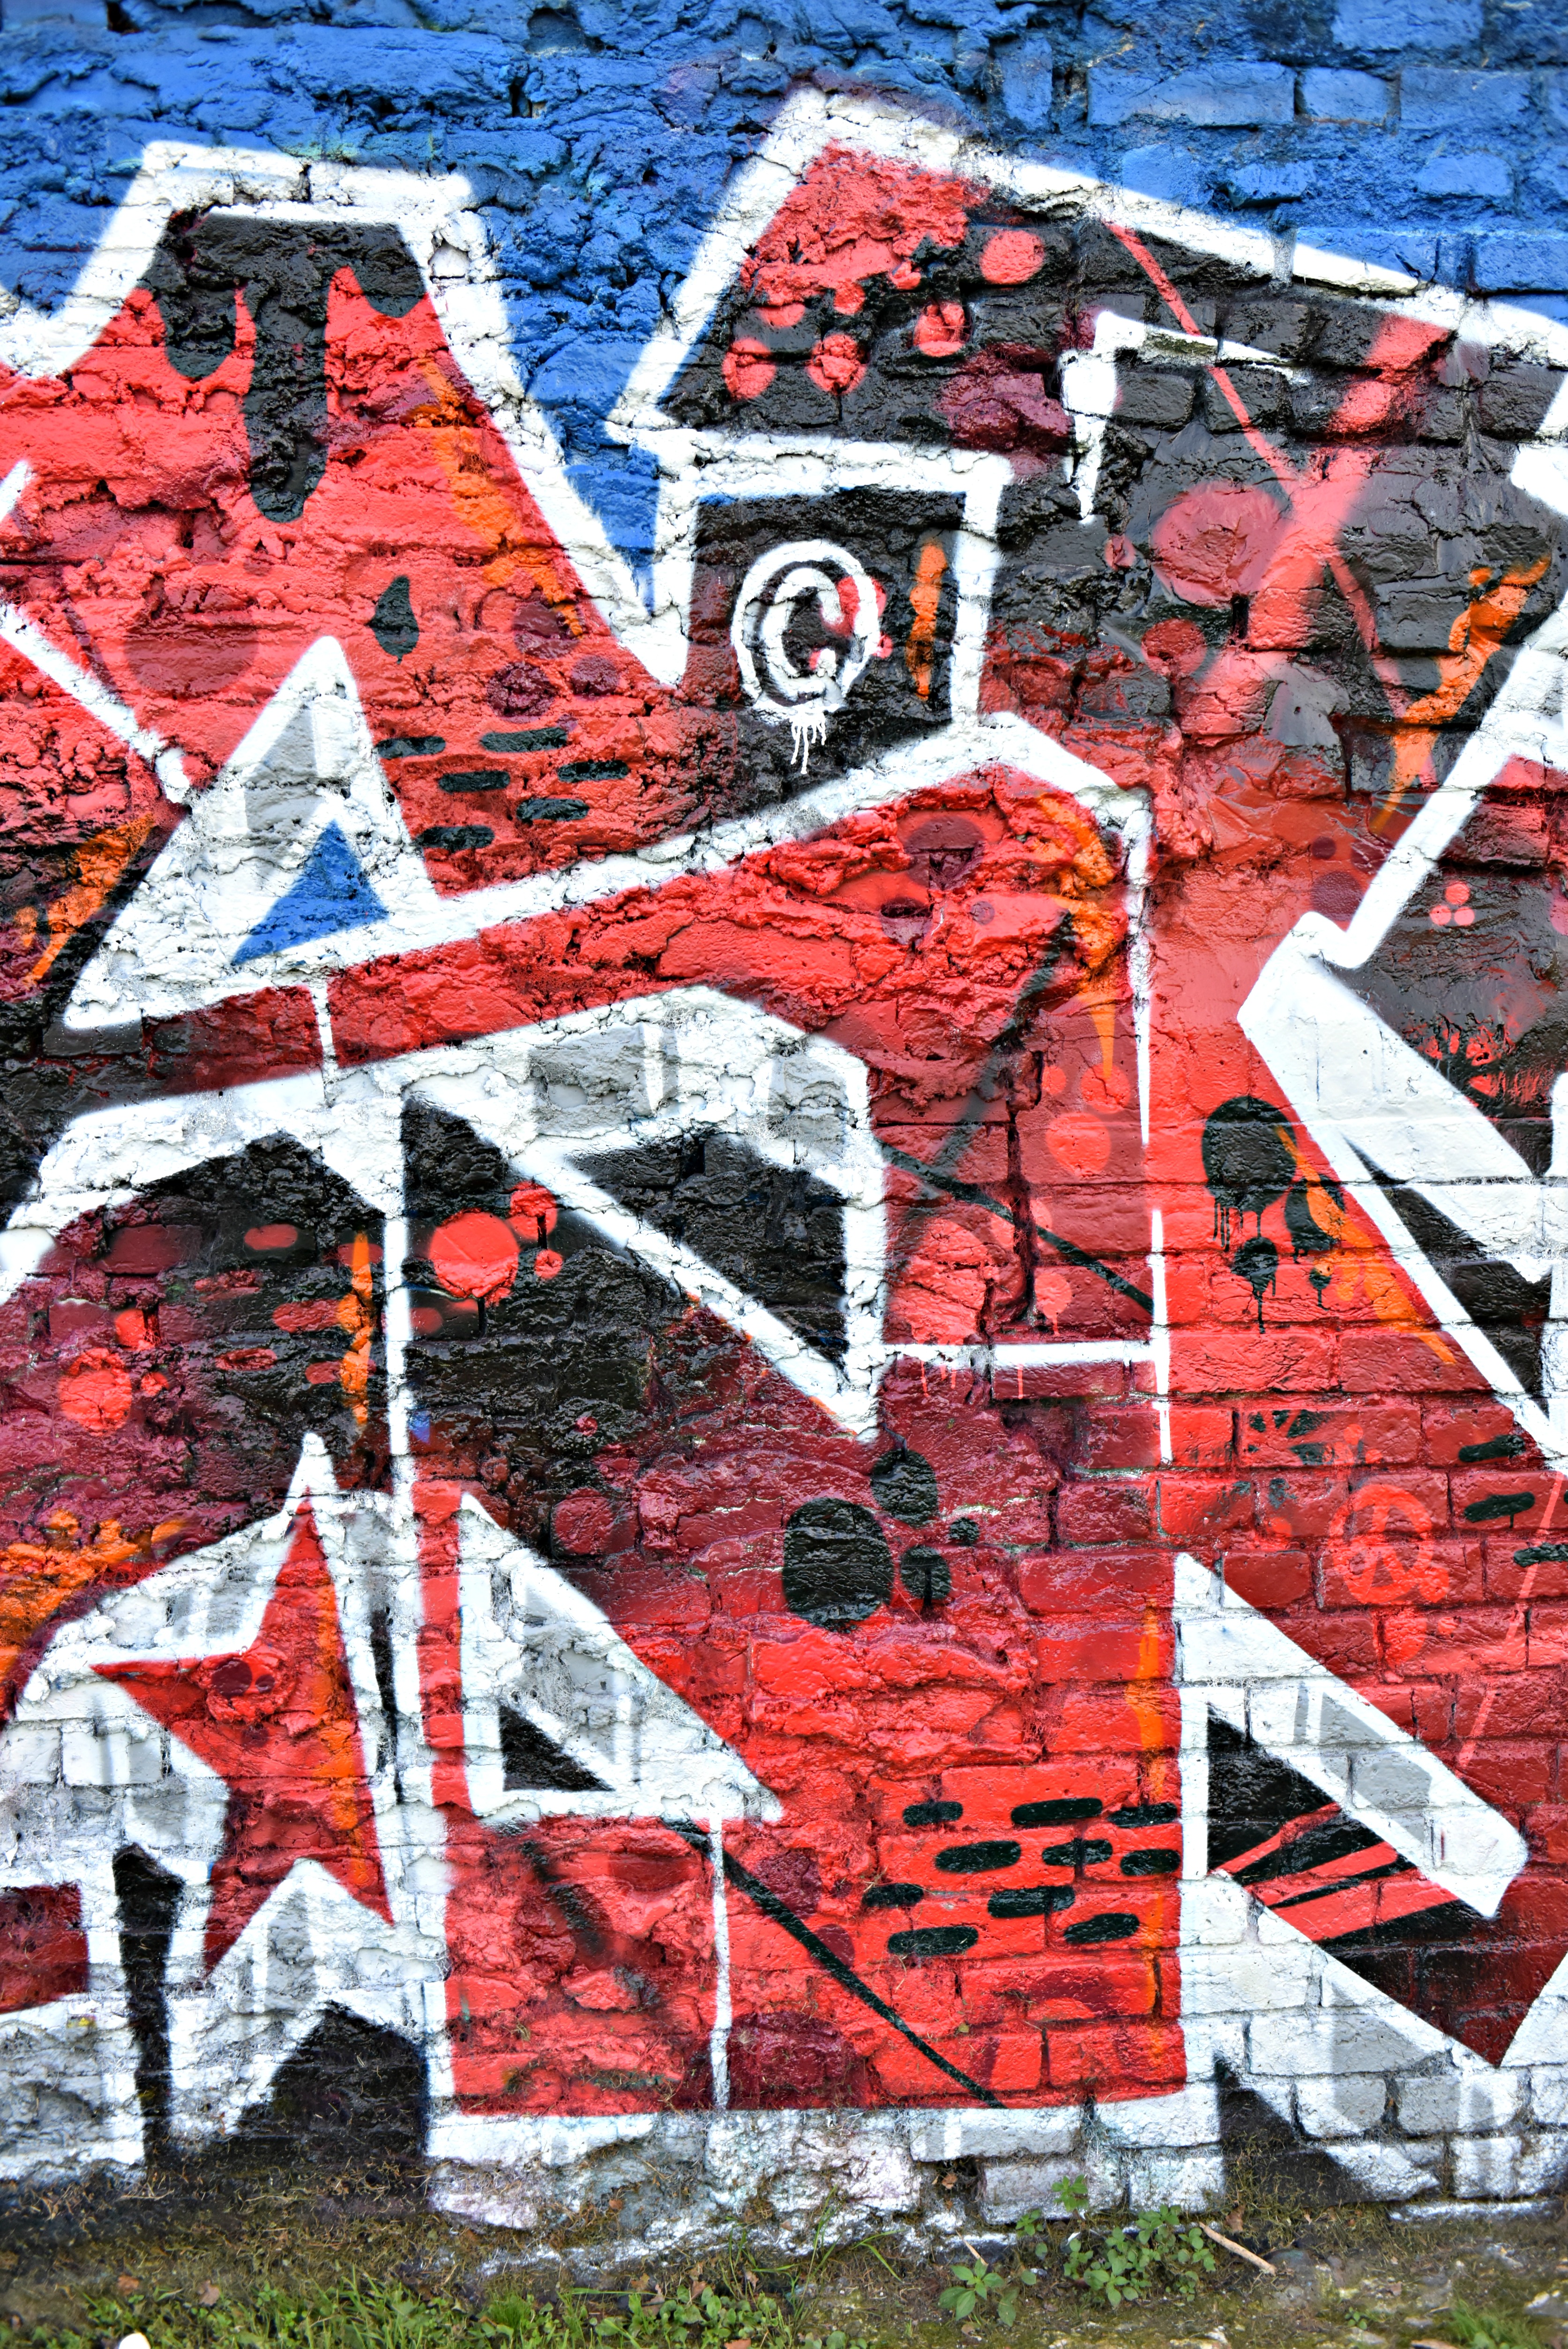 <img src="ana.jpg" alt="ana red and blue street art graffiti"> 